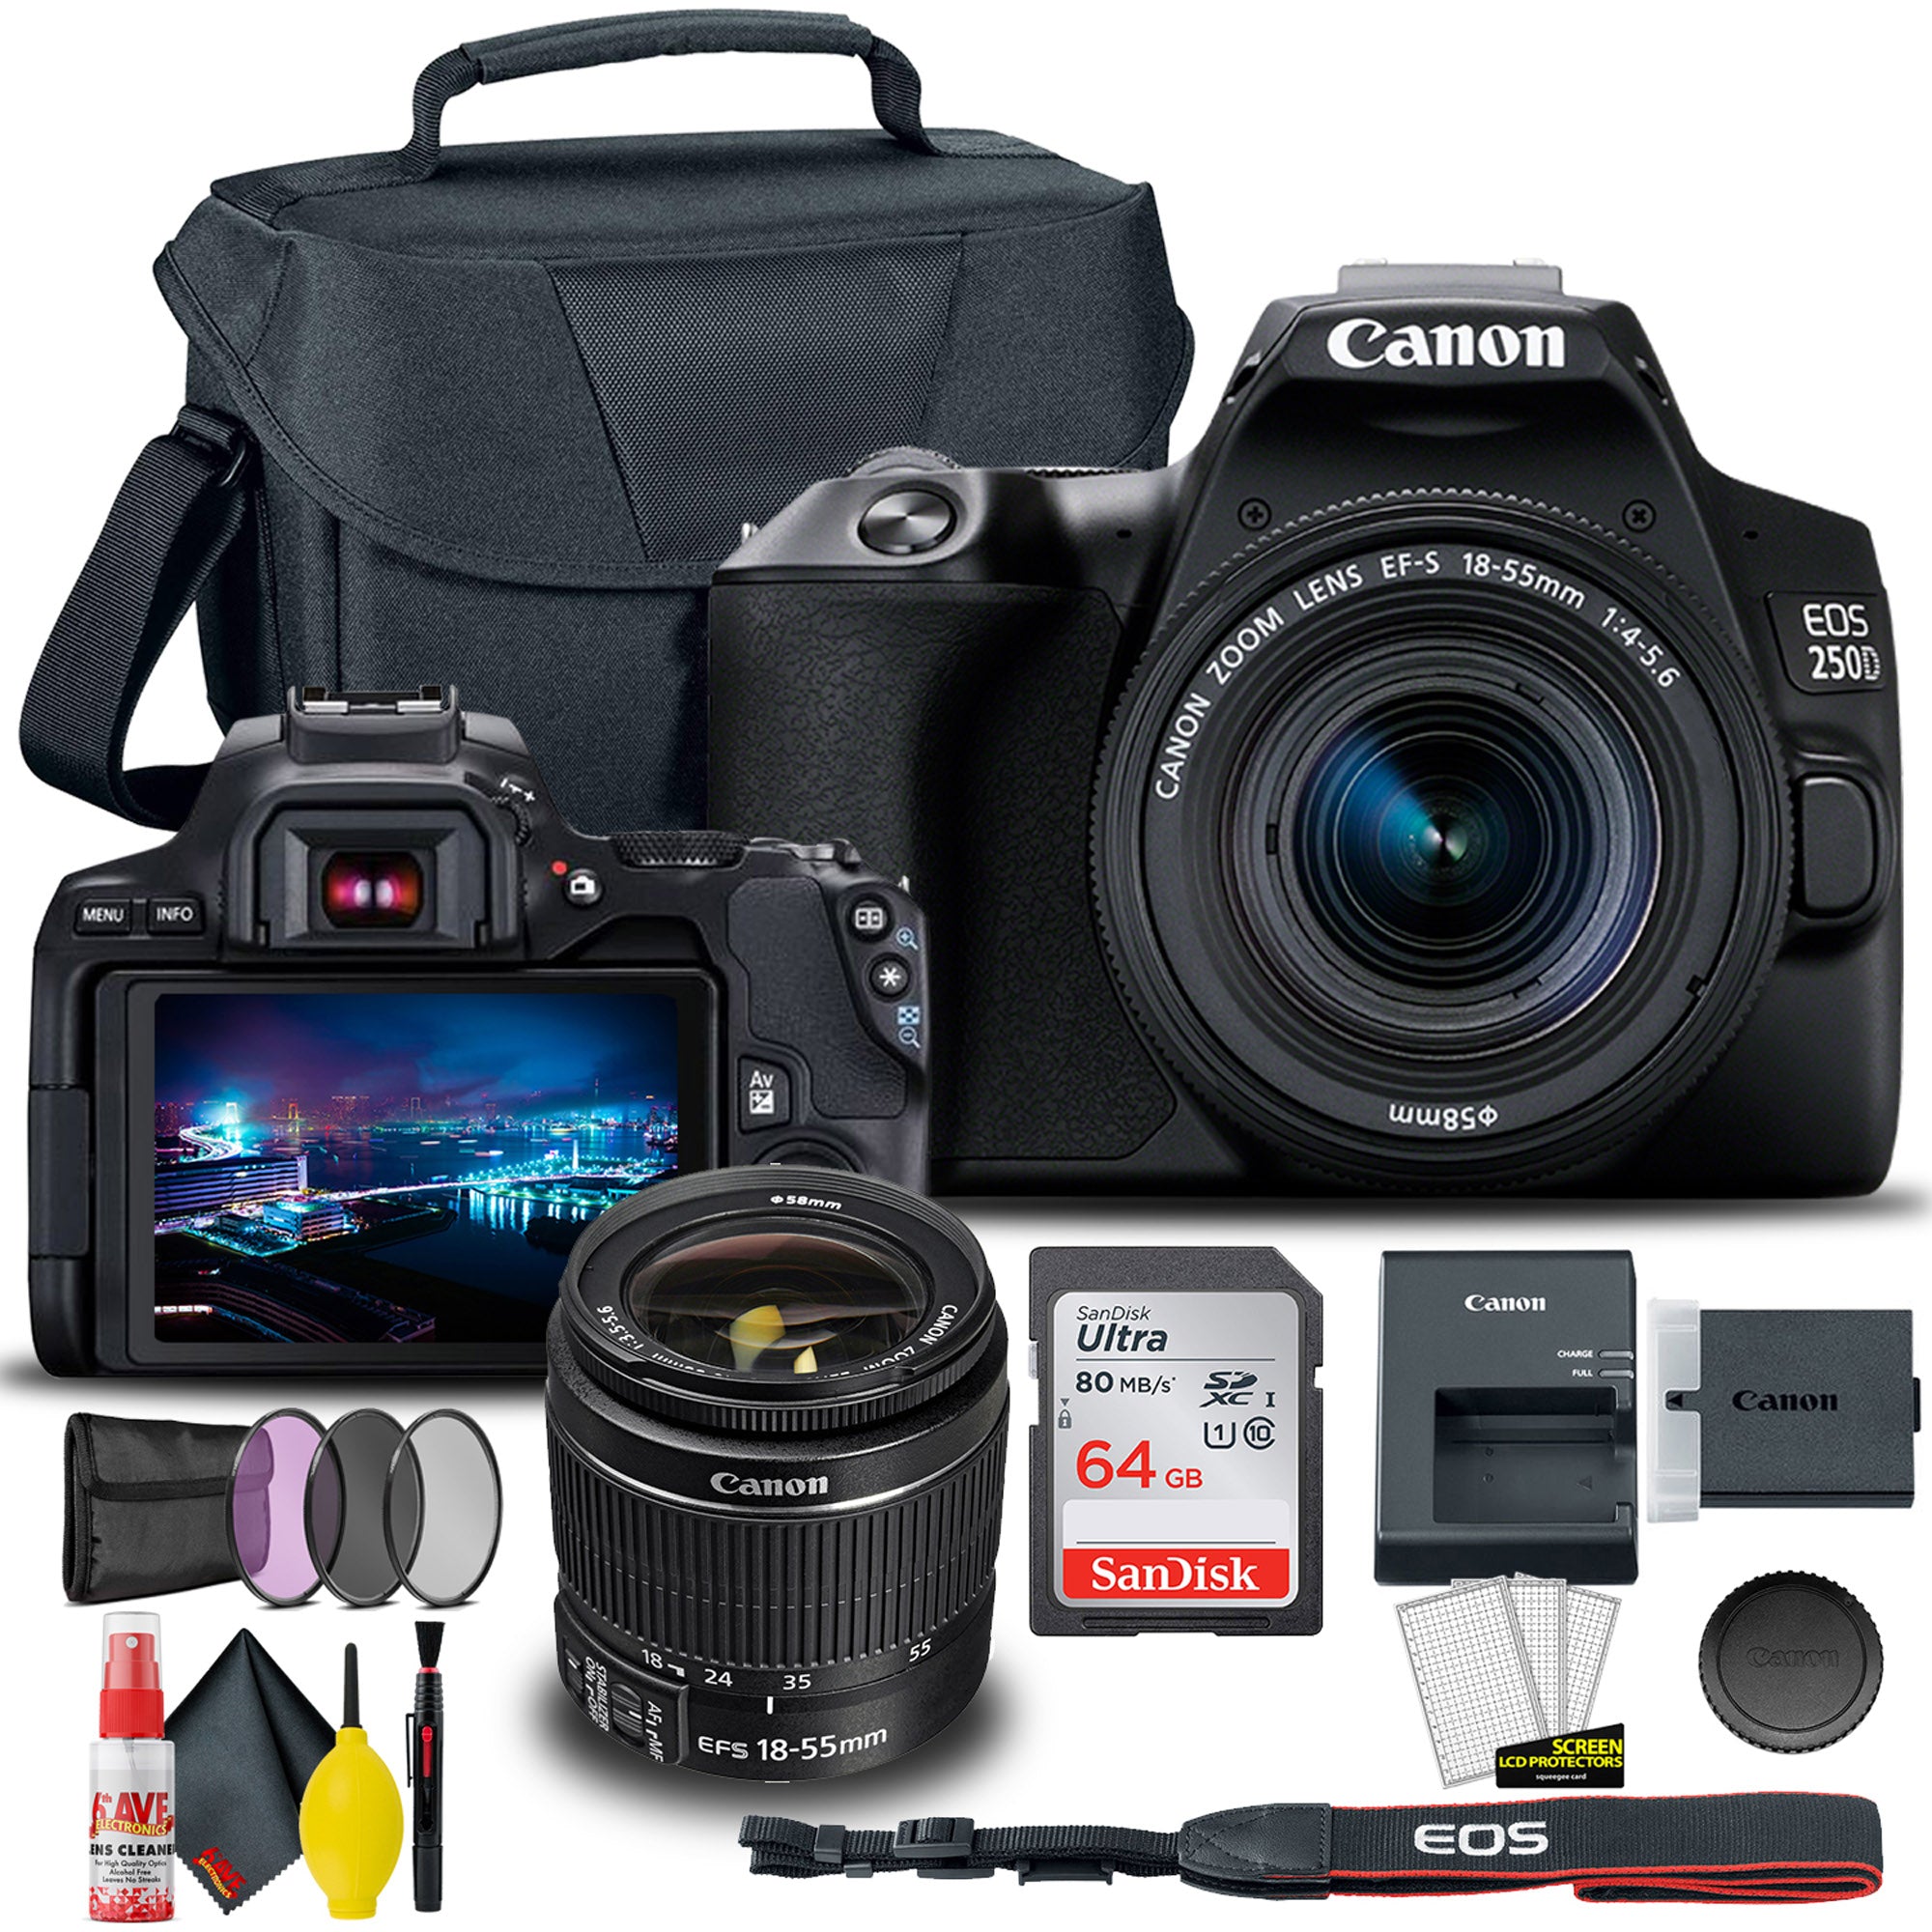 Canon EOS 250D / Rebel SL3 DSLR Camera with 18-55mm Lens (Black) + Creative Filter Set, EOS Camera Bag + 6AVE Electronics